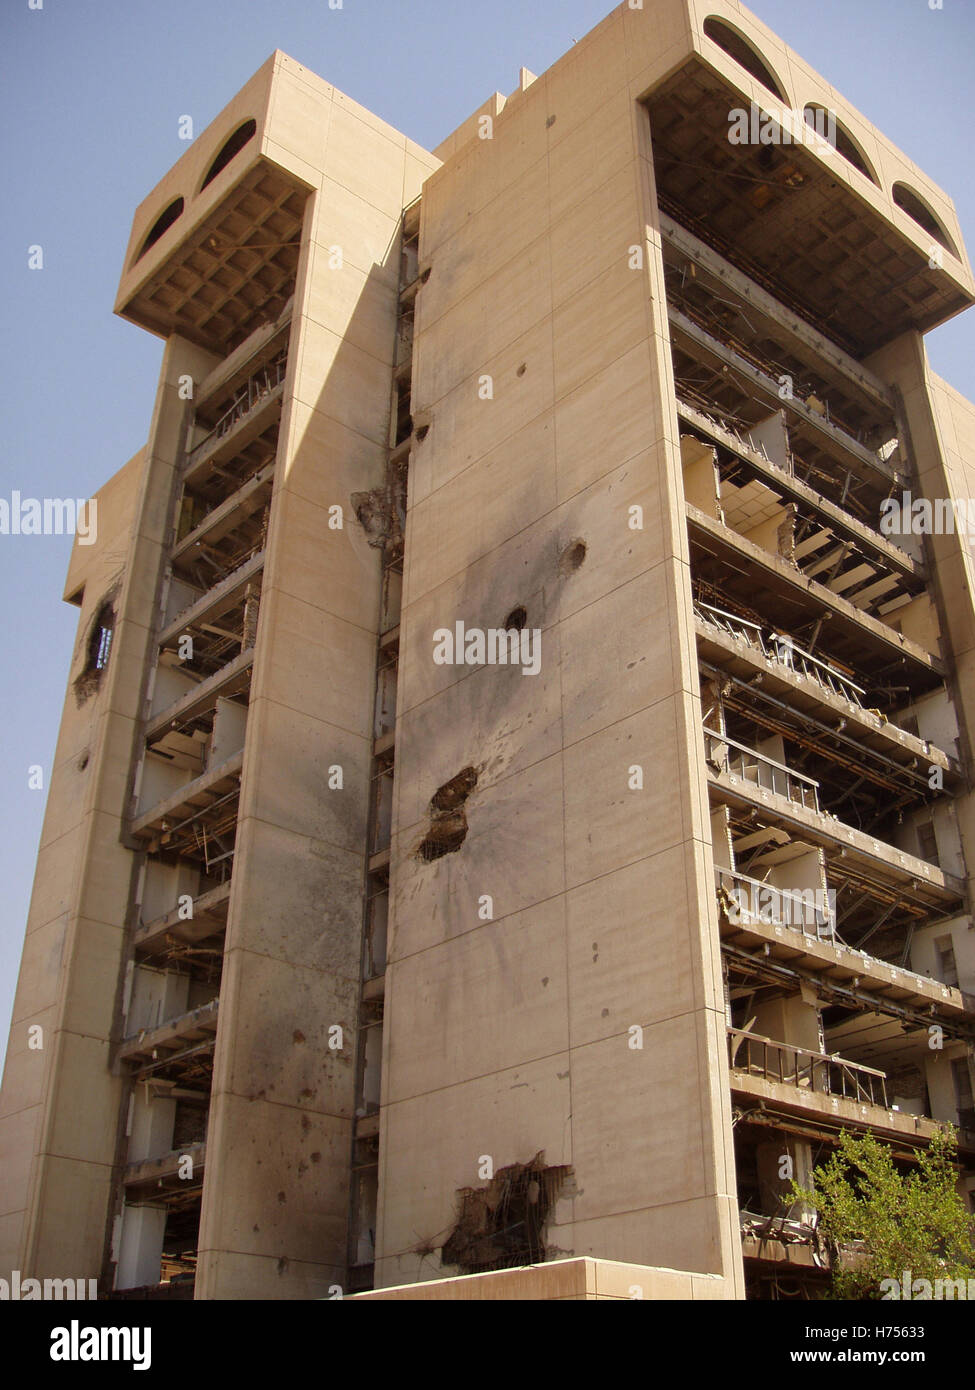 24th July 2003 Shell-damaged apartment building at the Al Jumhuriya Bridge in Baghdad, Iraq. Stock Photo